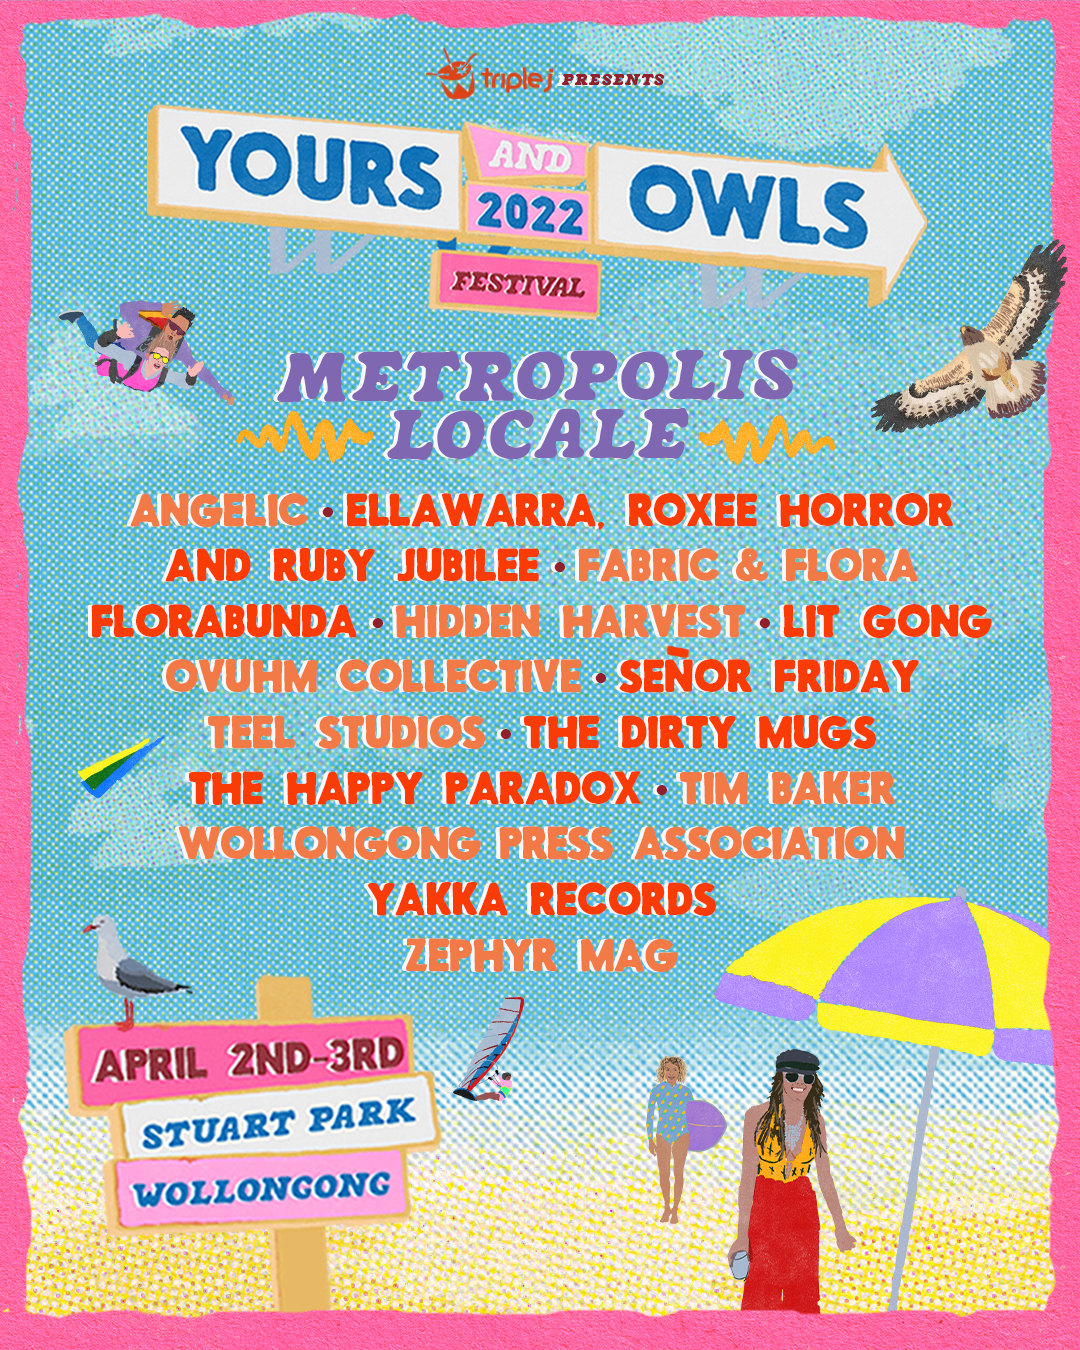 Yours & Owls Festival Meet Metropolis Locale